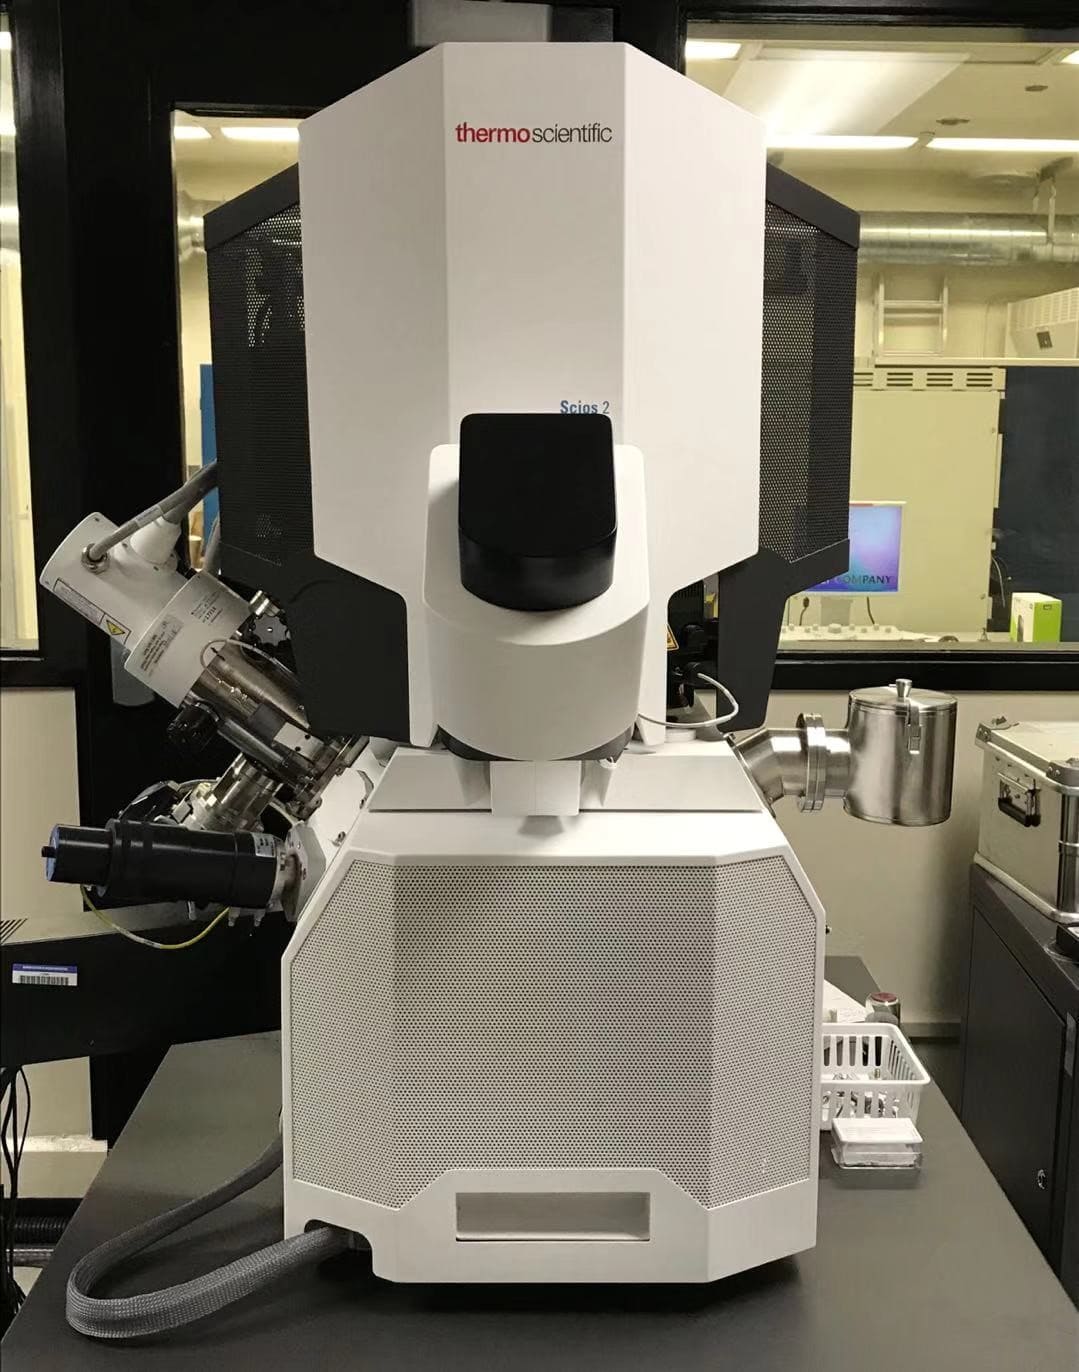 Thermo Scientific Scios 2 Dual-beam Focus Ion Beam/ Scanning Electron Microscope